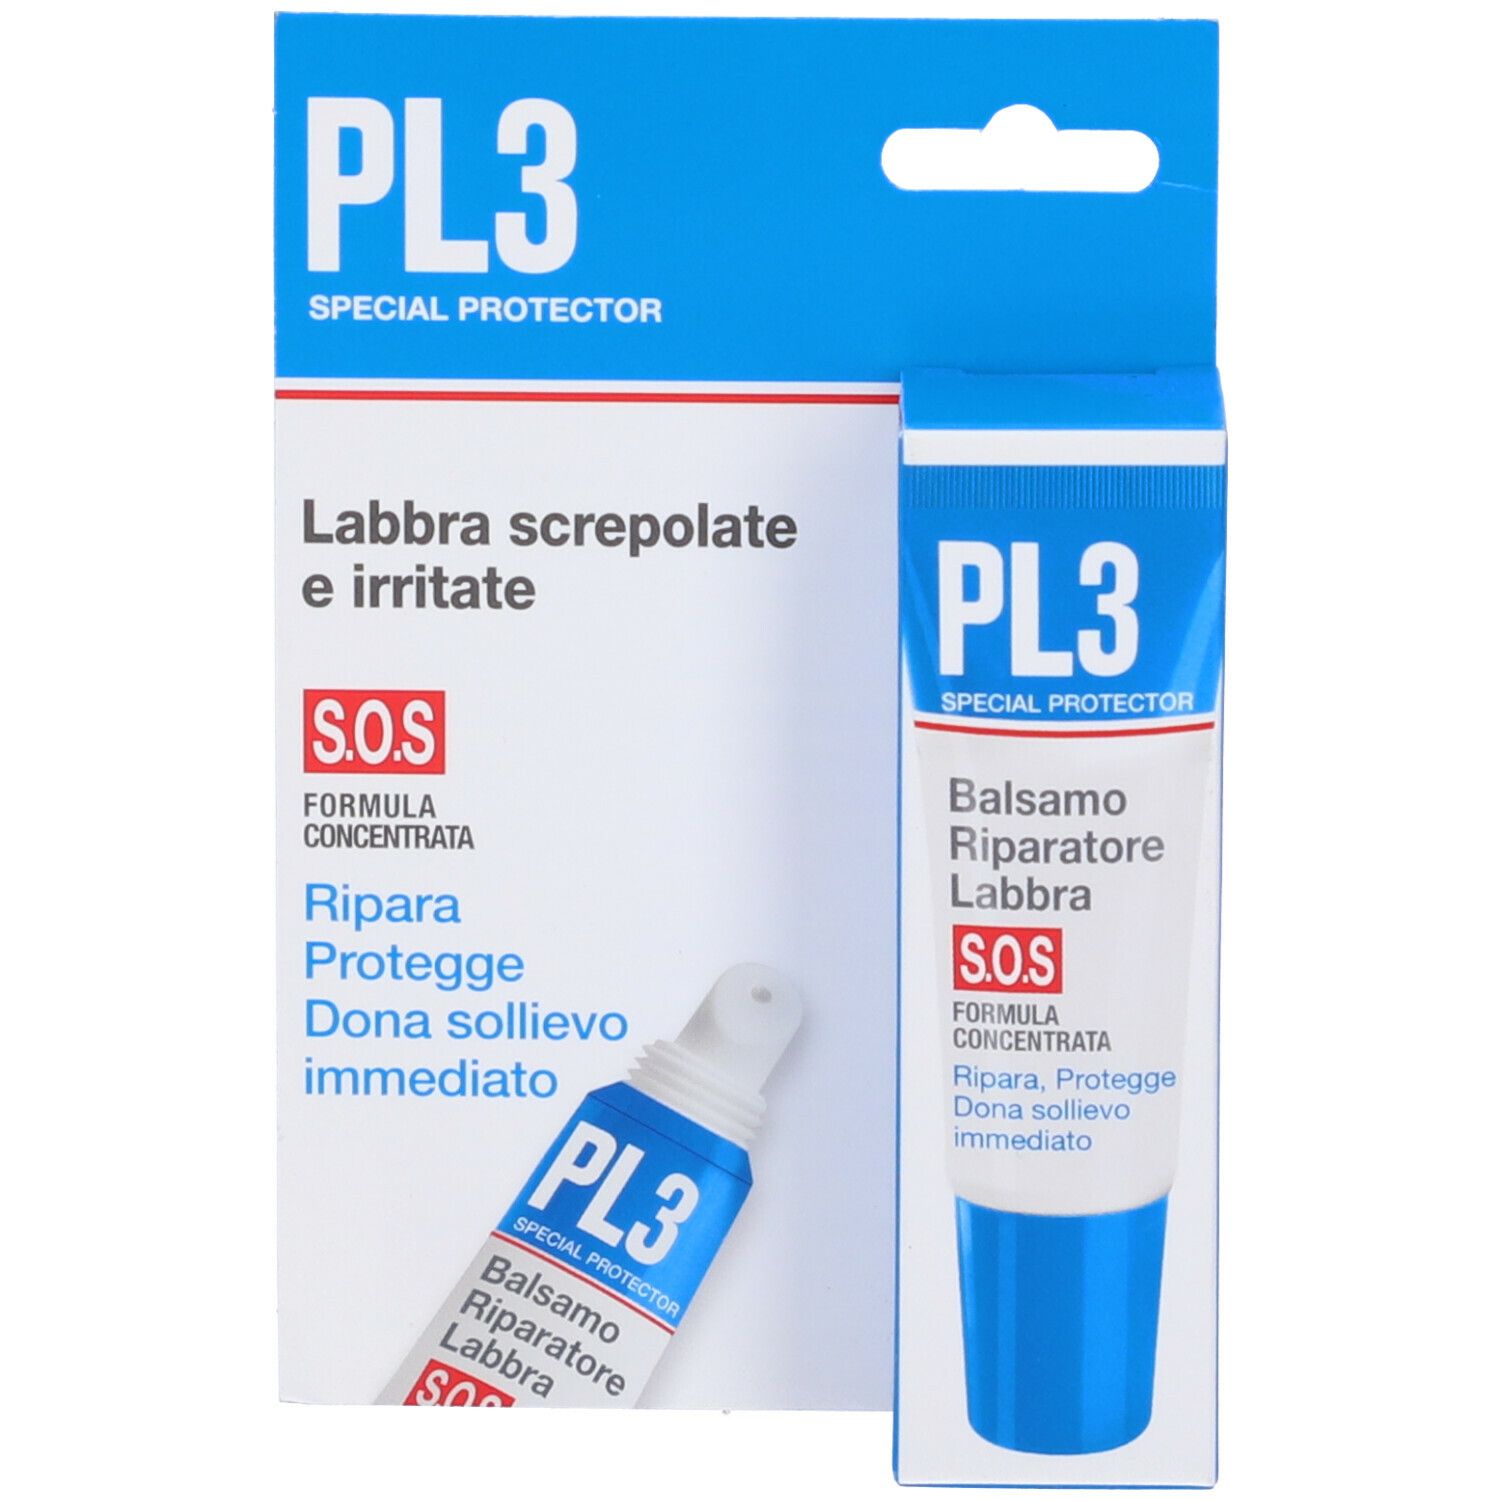 Image of PL3 Balsamo Riparatore Labbra Sos